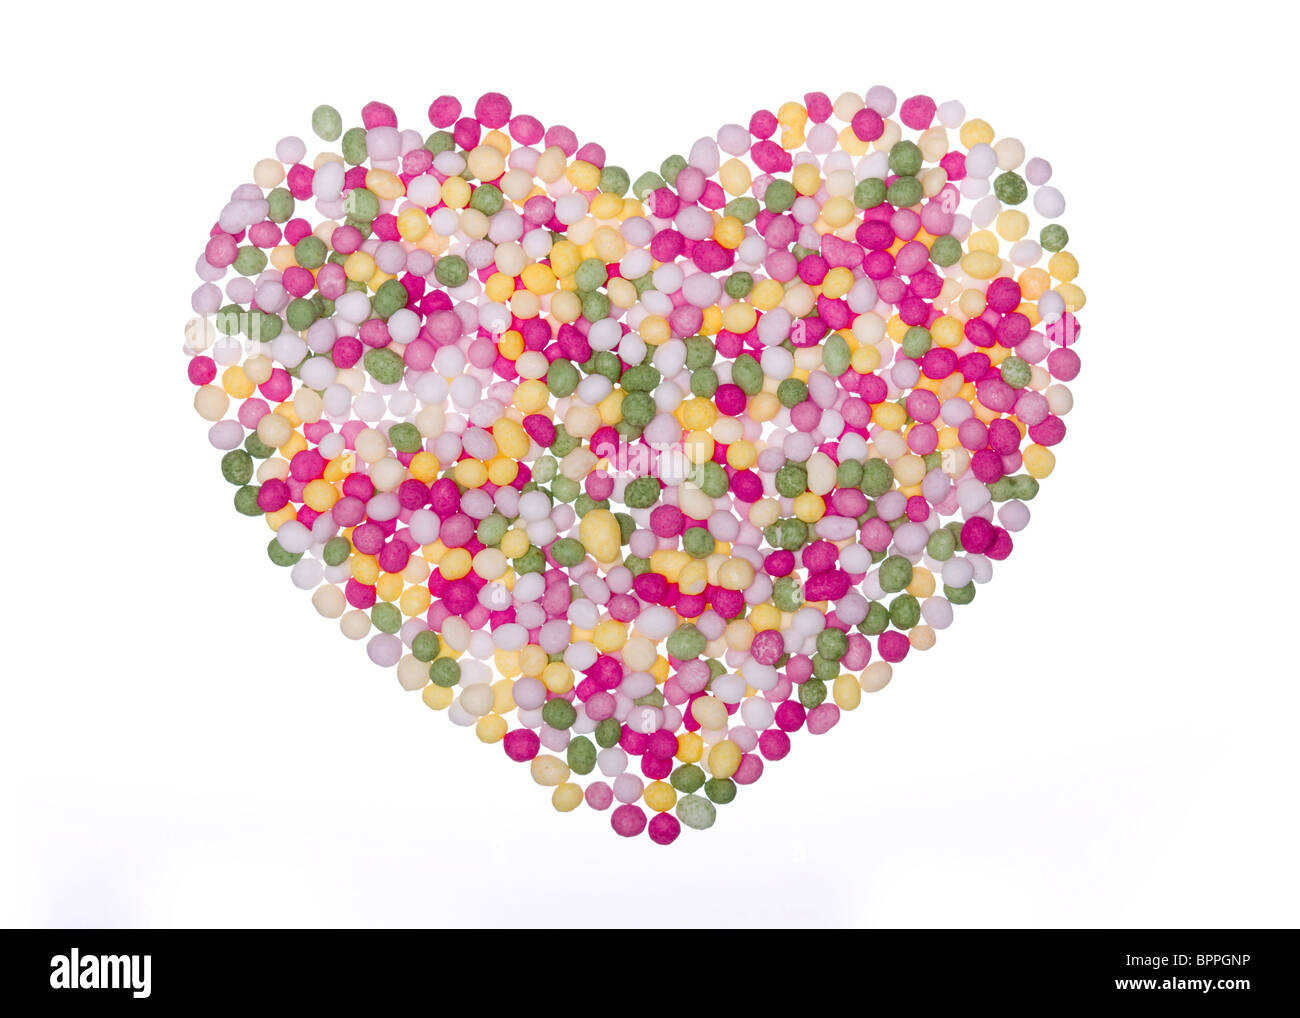 Heart shaped sprinkles Stock Photo